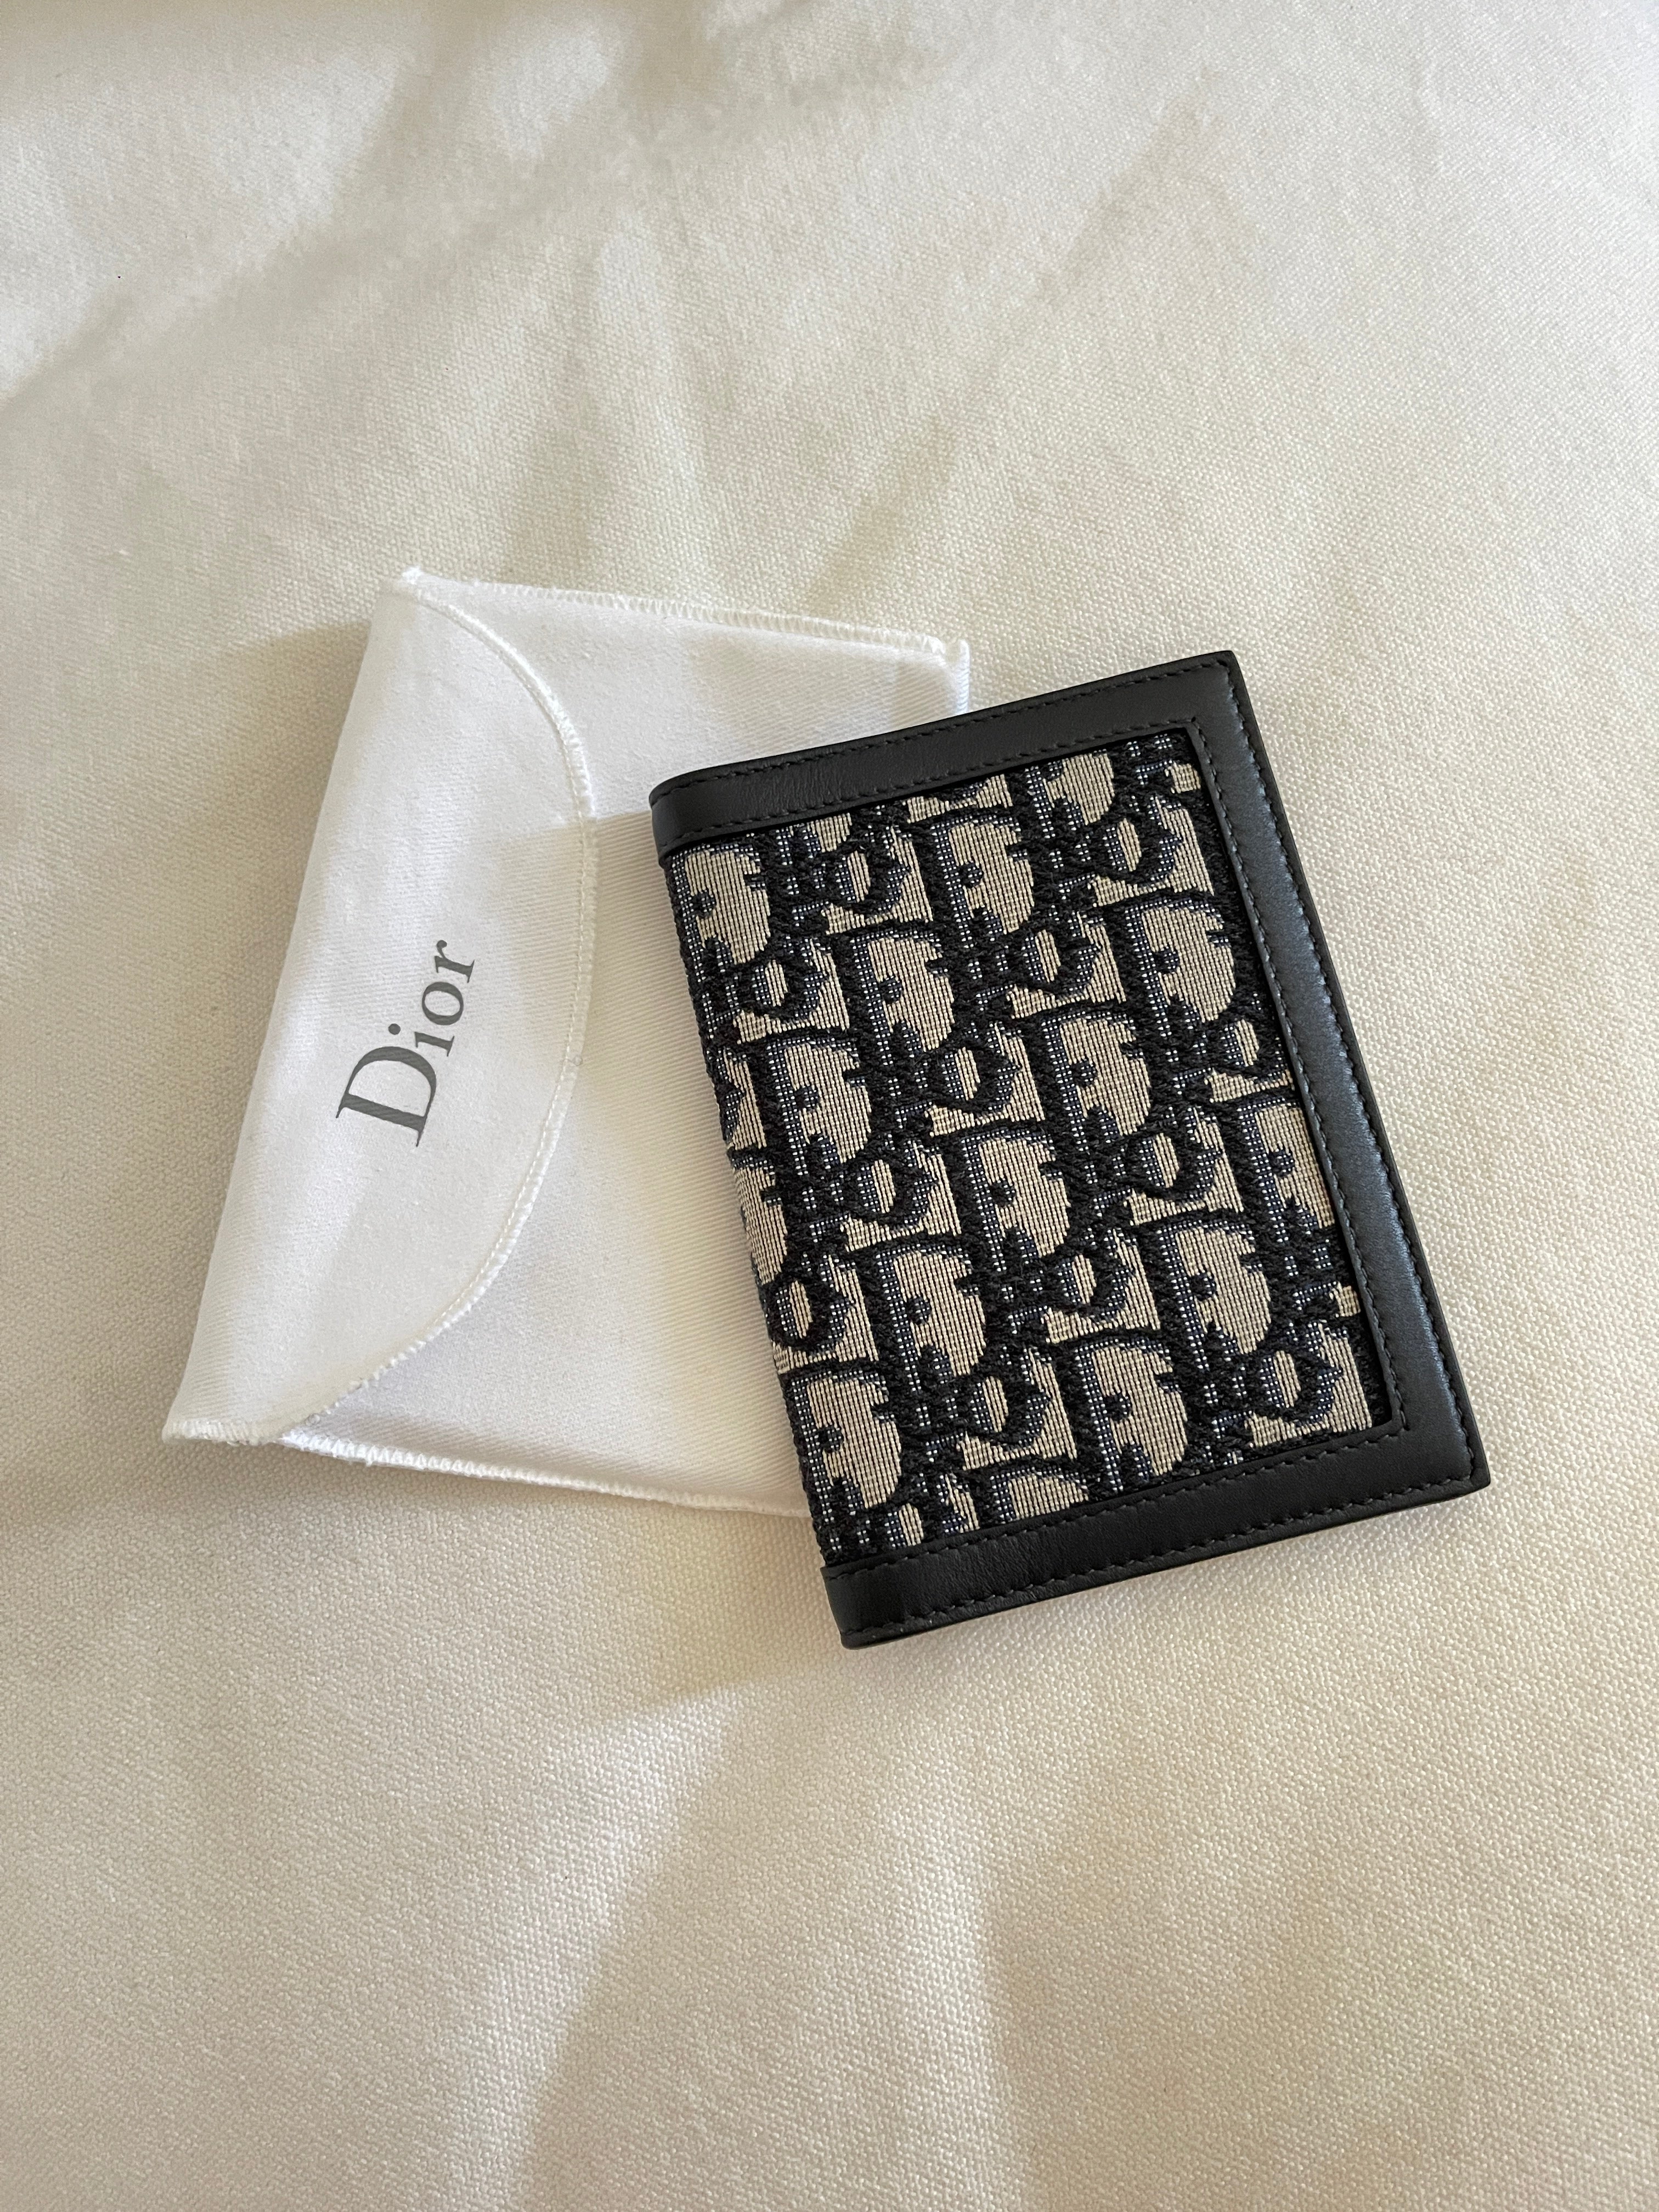 Buy Dior Passport Cover $630 Online Algeria